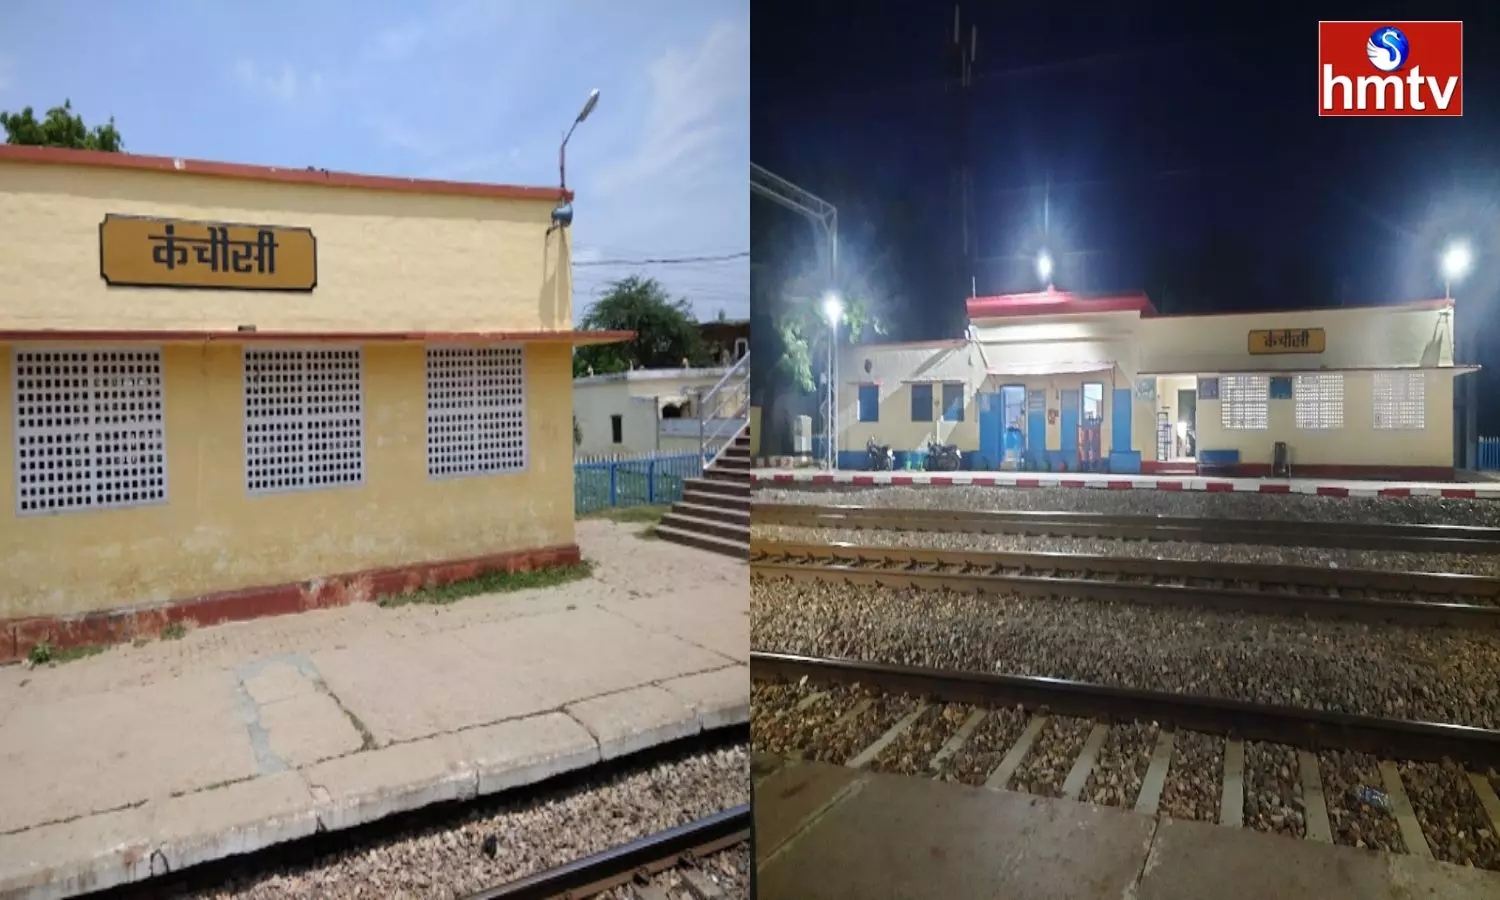 Kanchausi Railway Station and Platforms between Kanpur Dehat and Oraiya Districts check Indian Railways Interesting facts